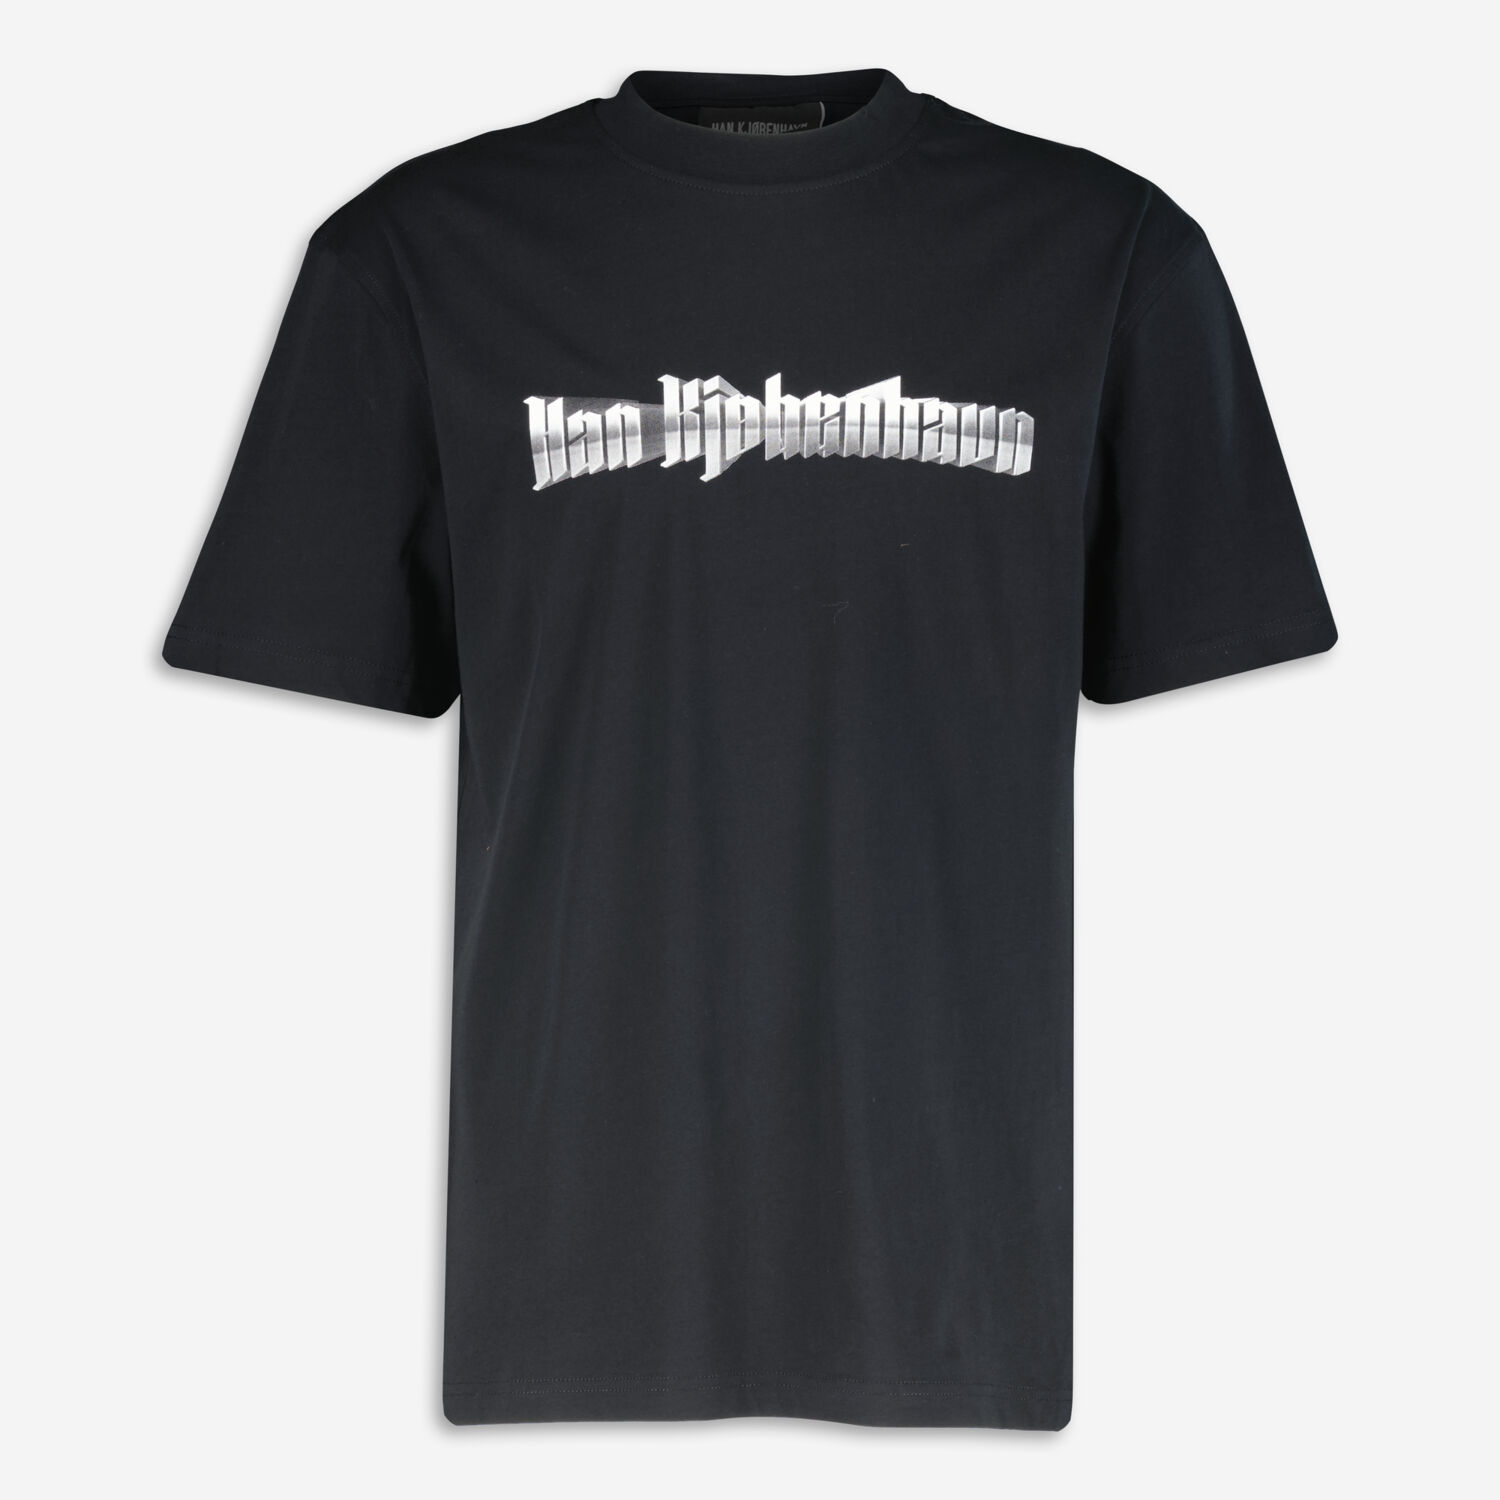 Черная футболка с логотипом Han Kjobenhavn